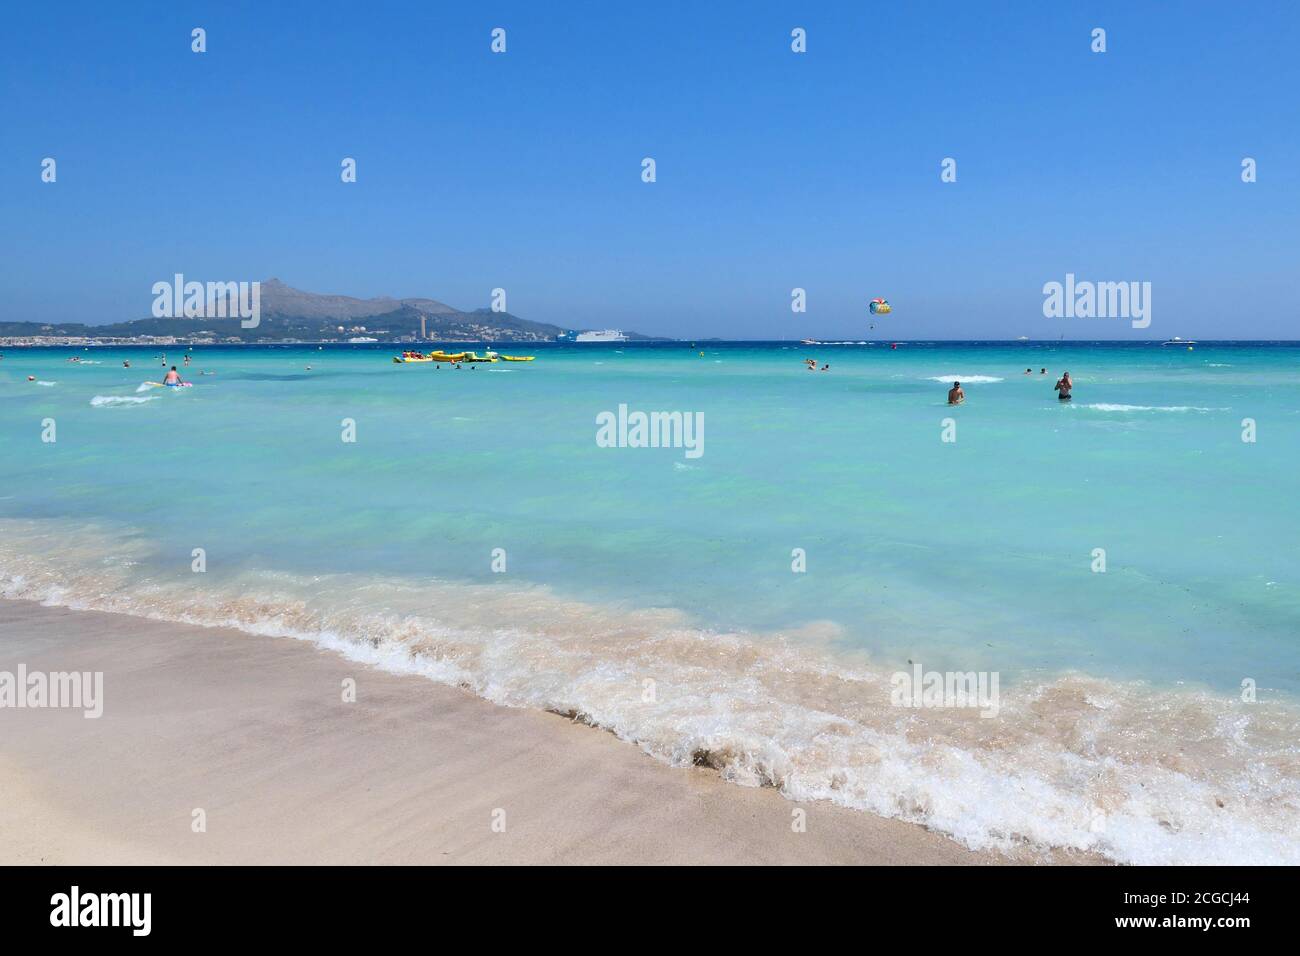 Playa de Muro beach, Mallorca island, Spain. Stock Photo